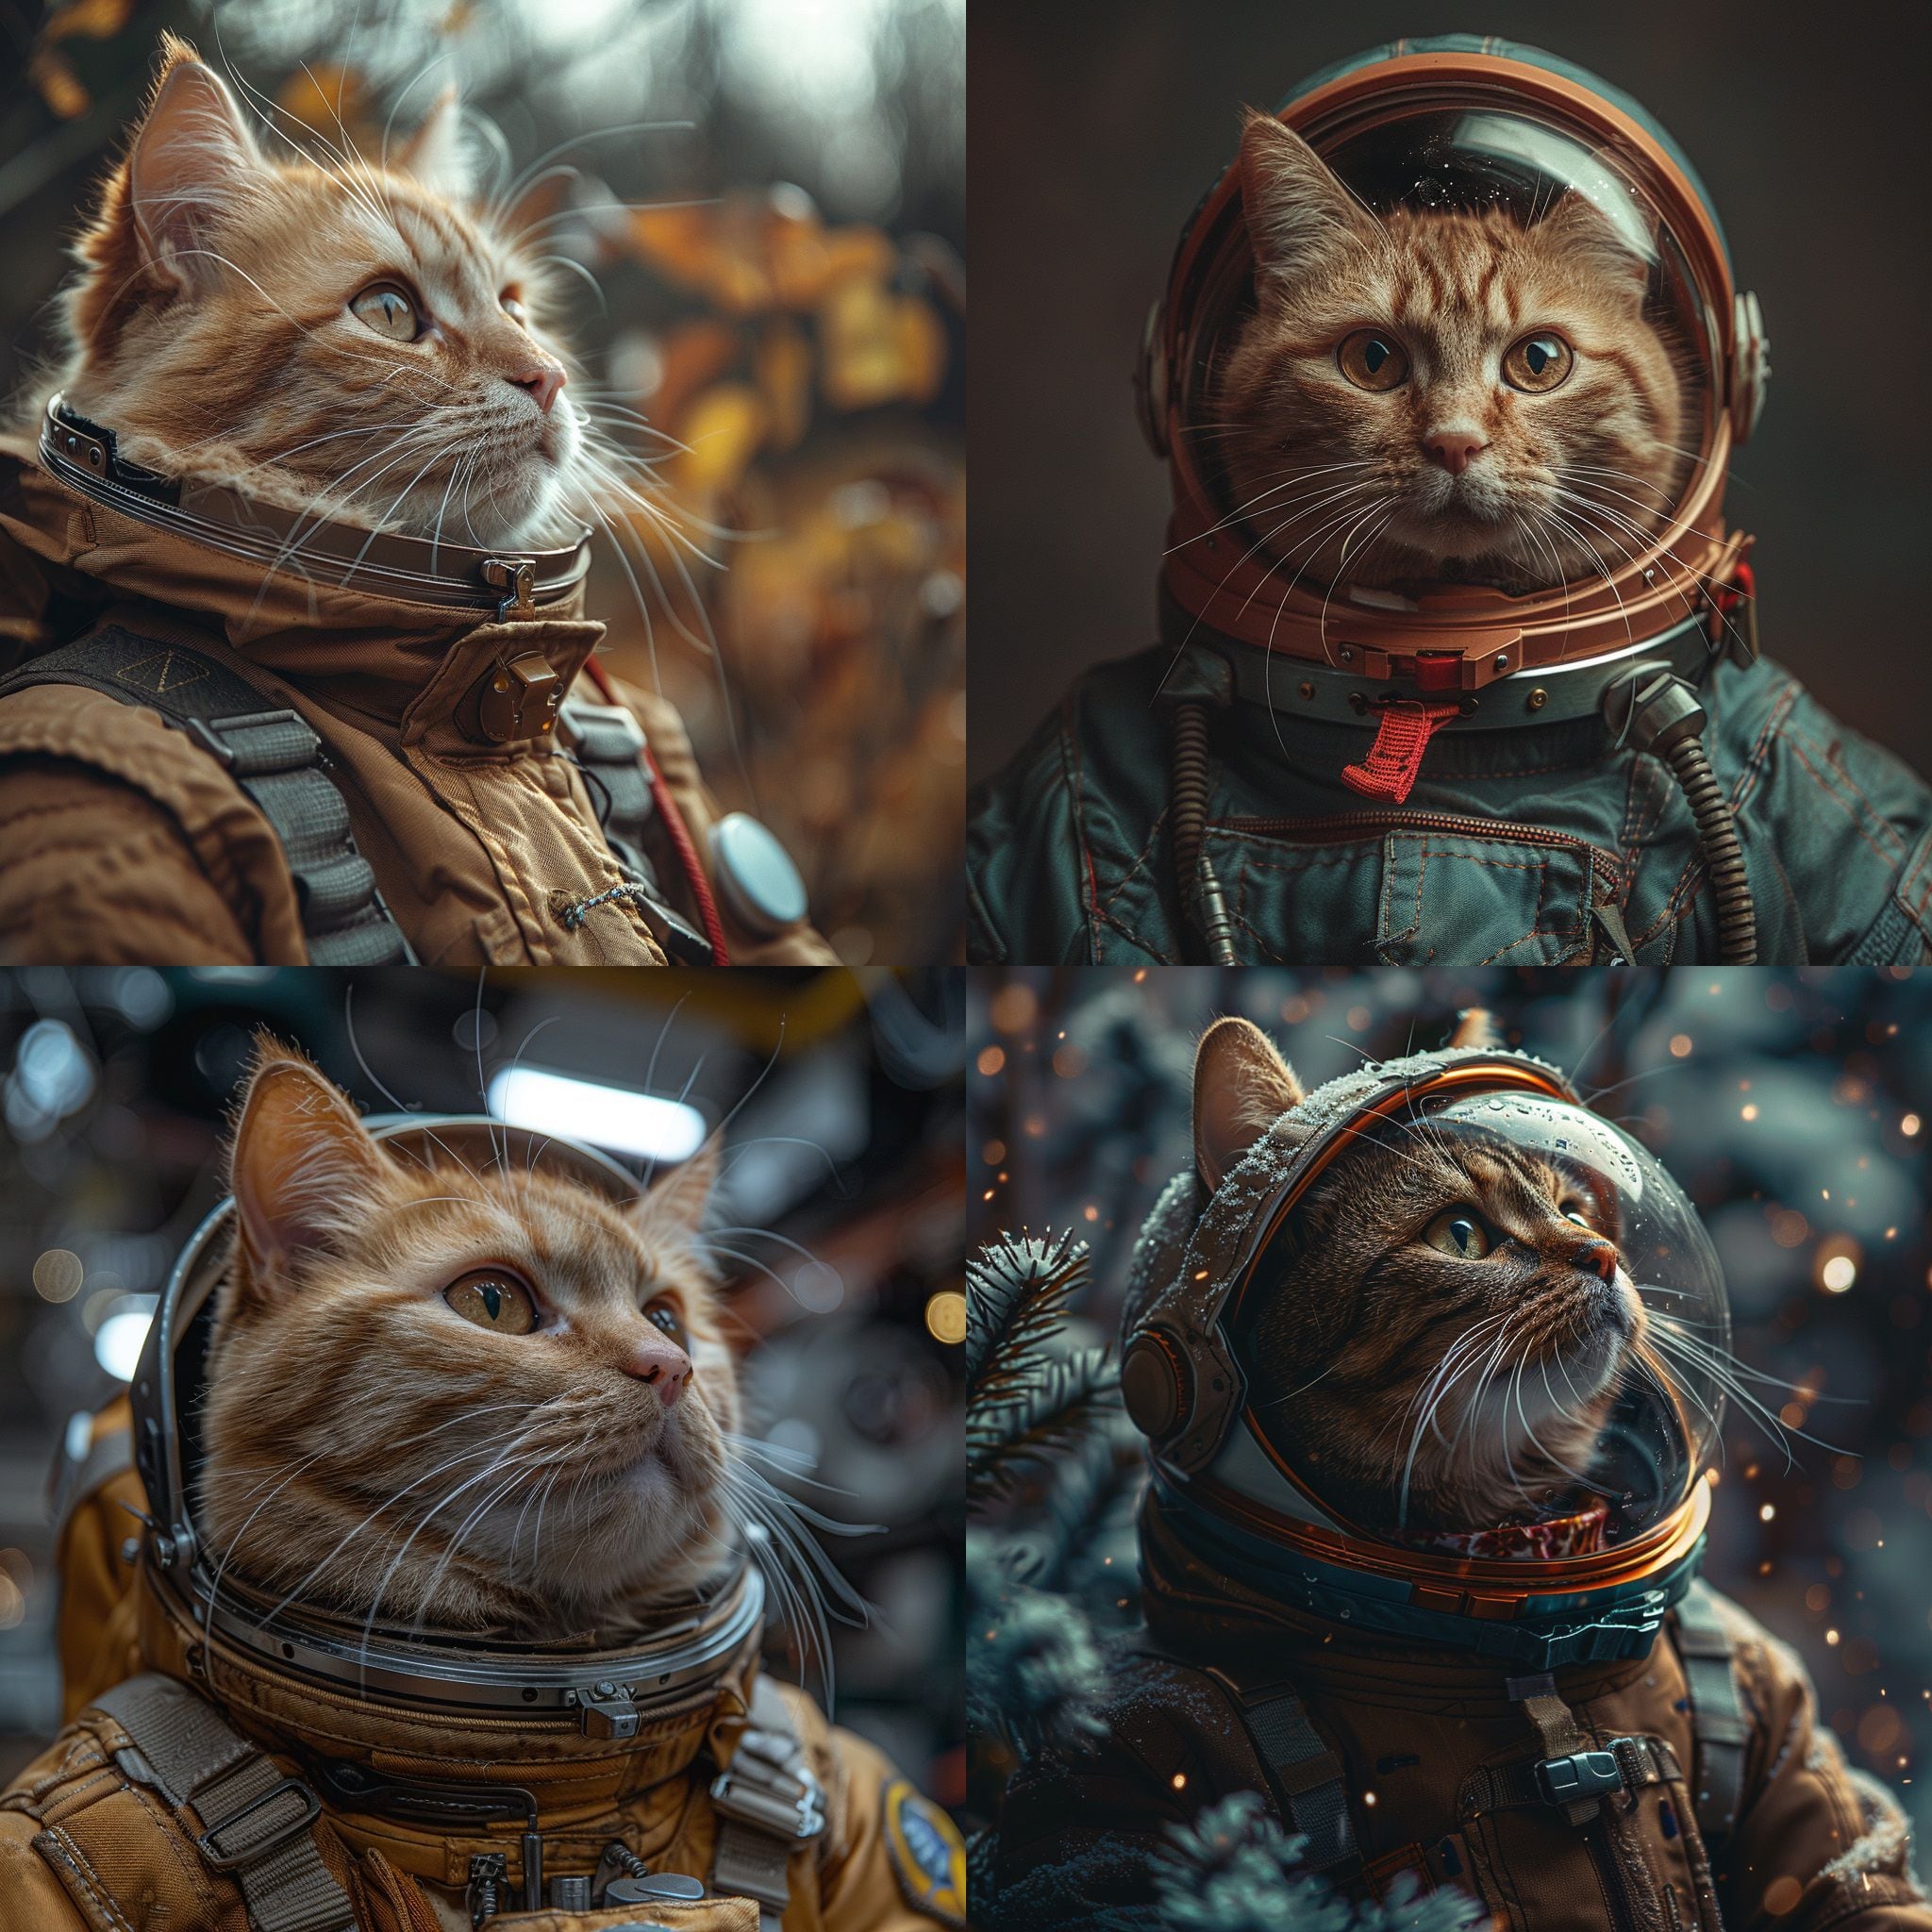 Gato astronauta según la Inteligencia Artificial de Midjourney